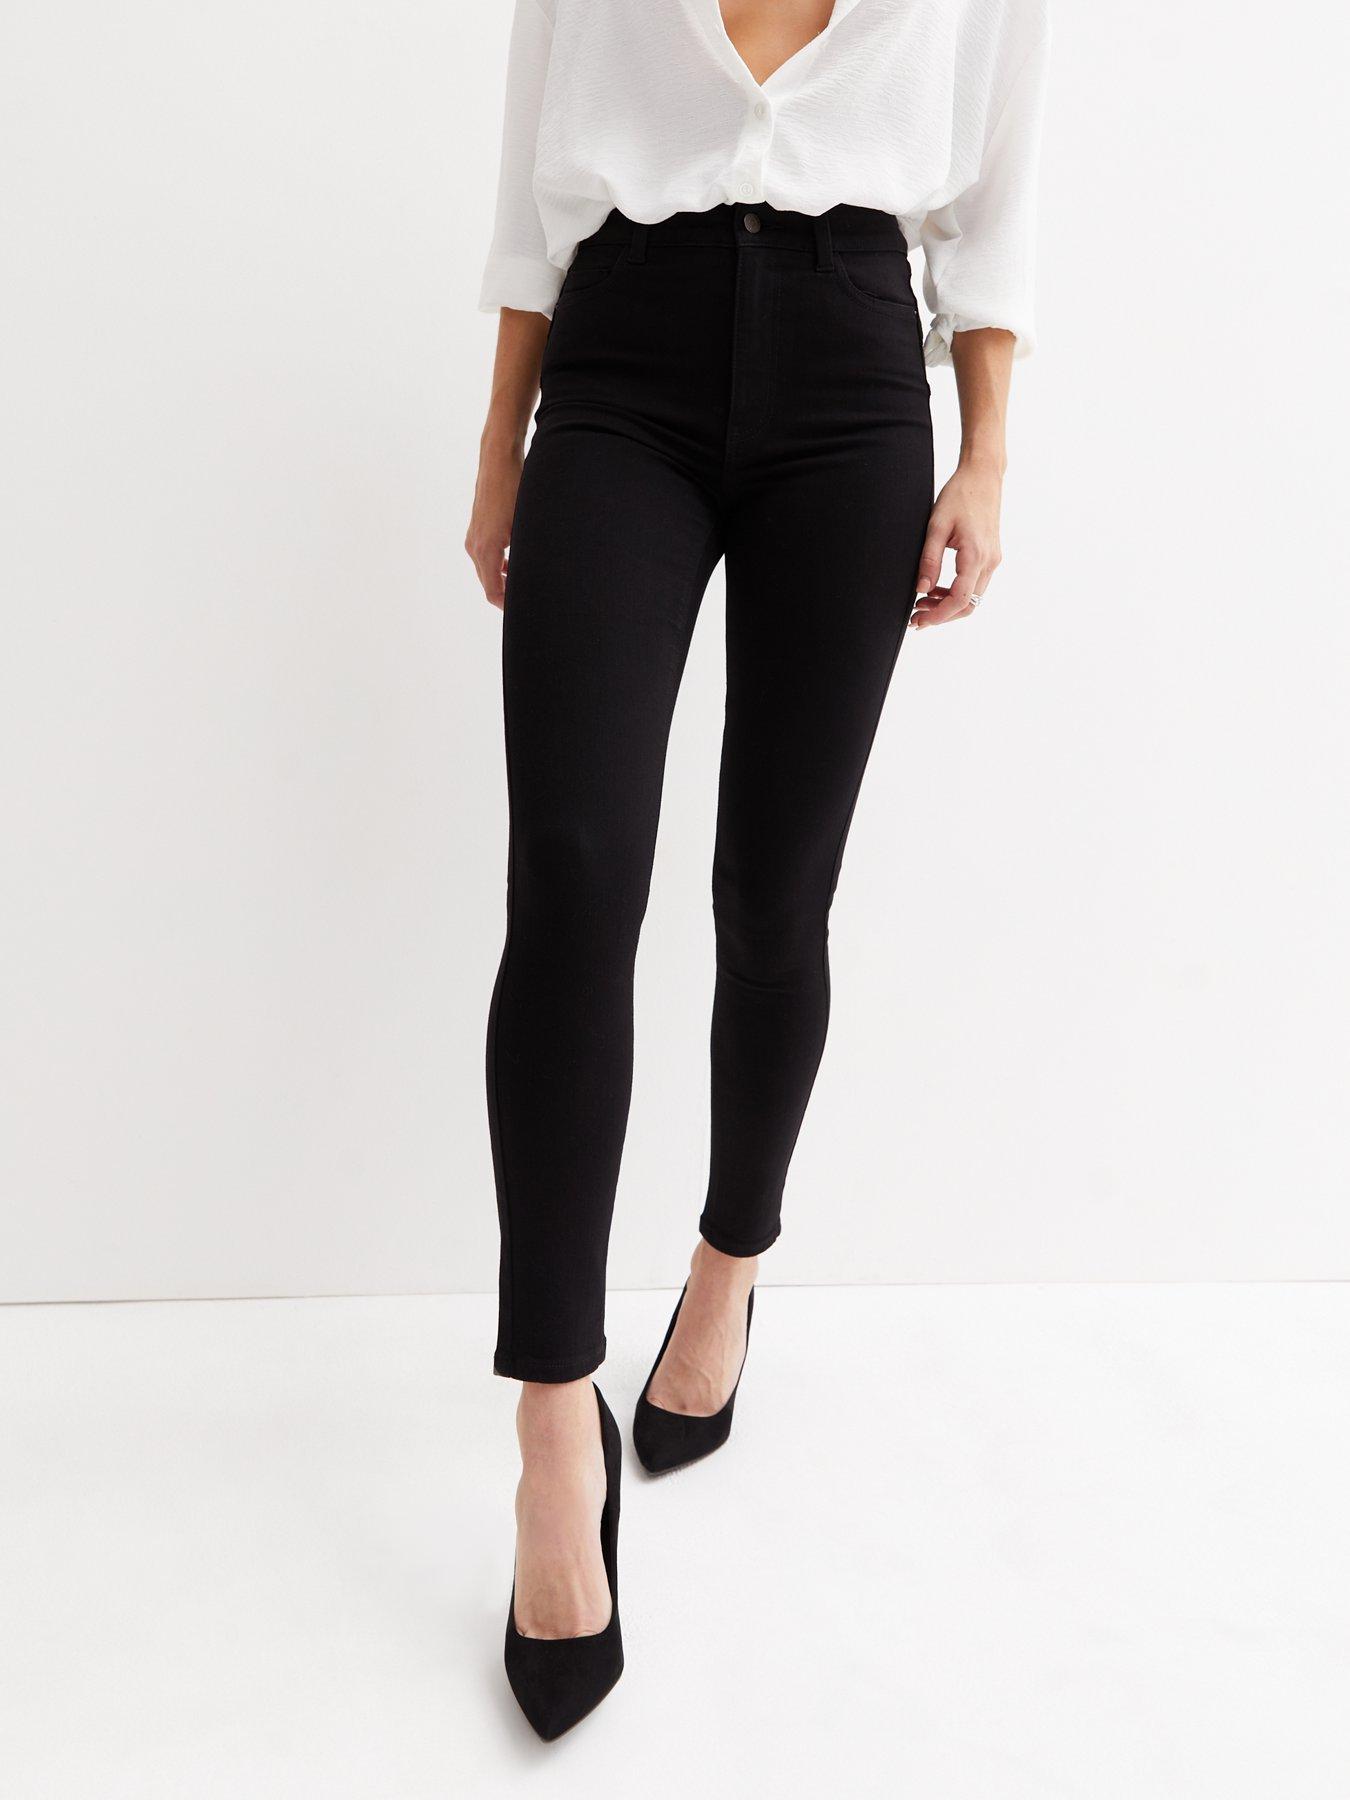 New Look Lift And Shape Jenna Skinny Jeans - Black